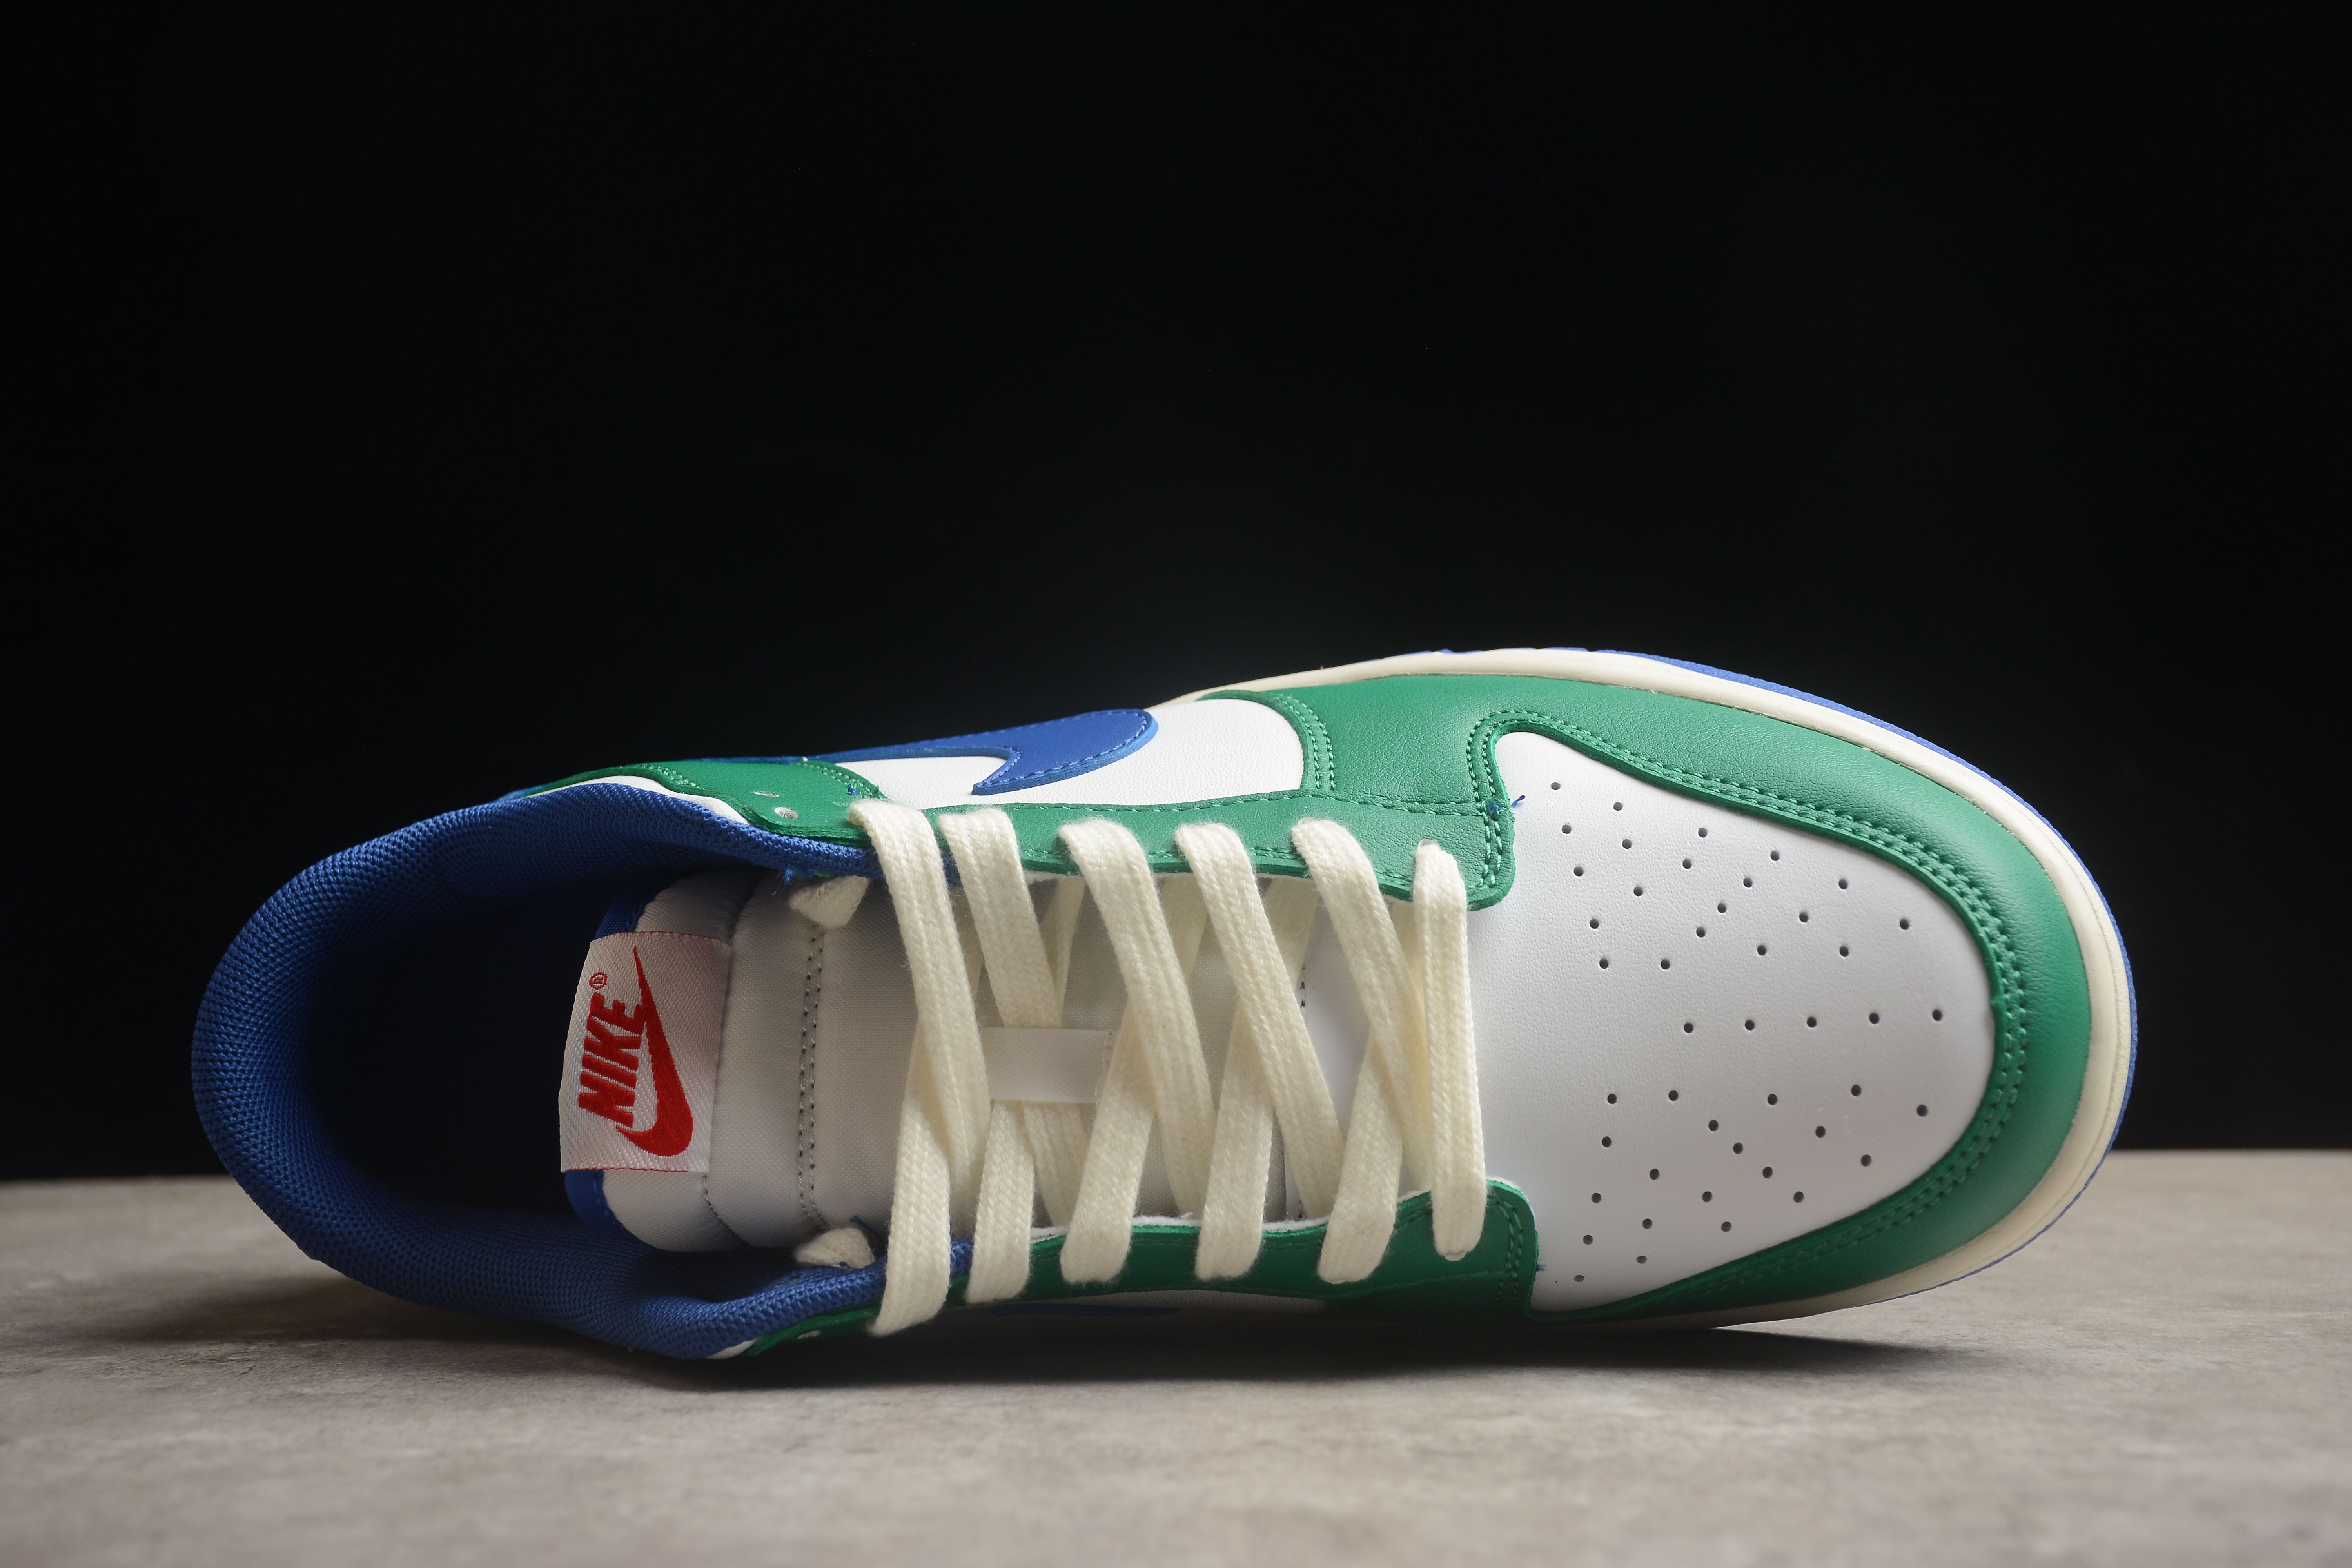 Nike SB dunk low green blue shoes